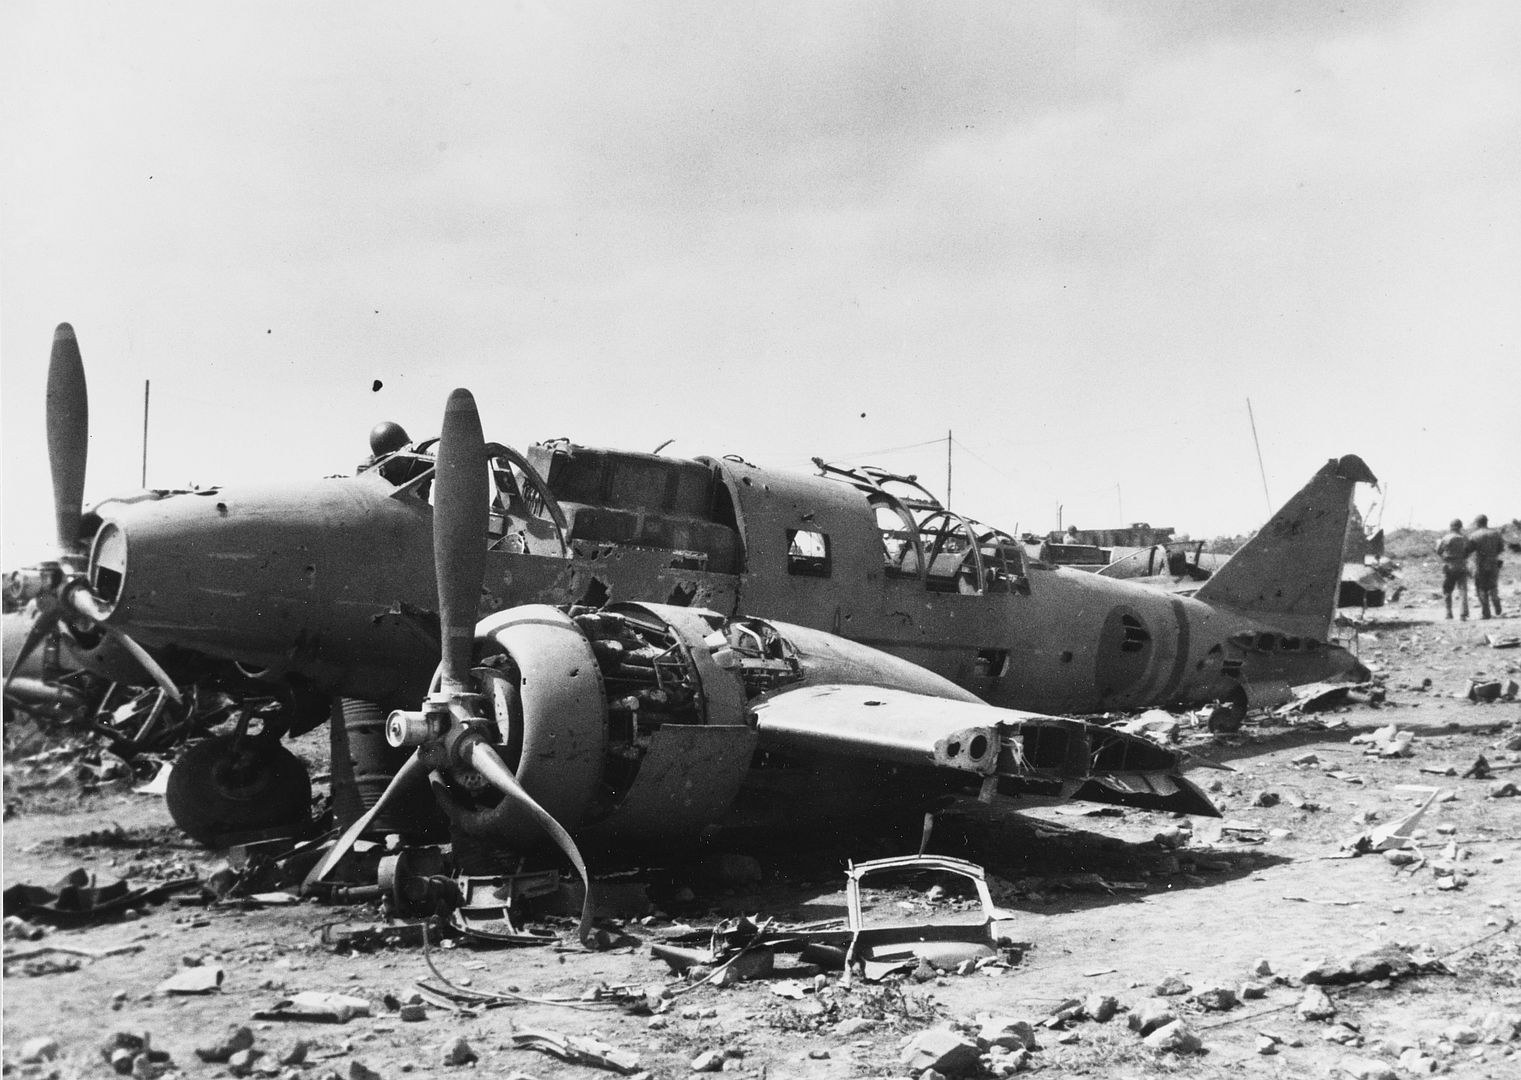 II Dinah Reconnaissance Airplane On An Iwo Jima Airfield 24 February 1945